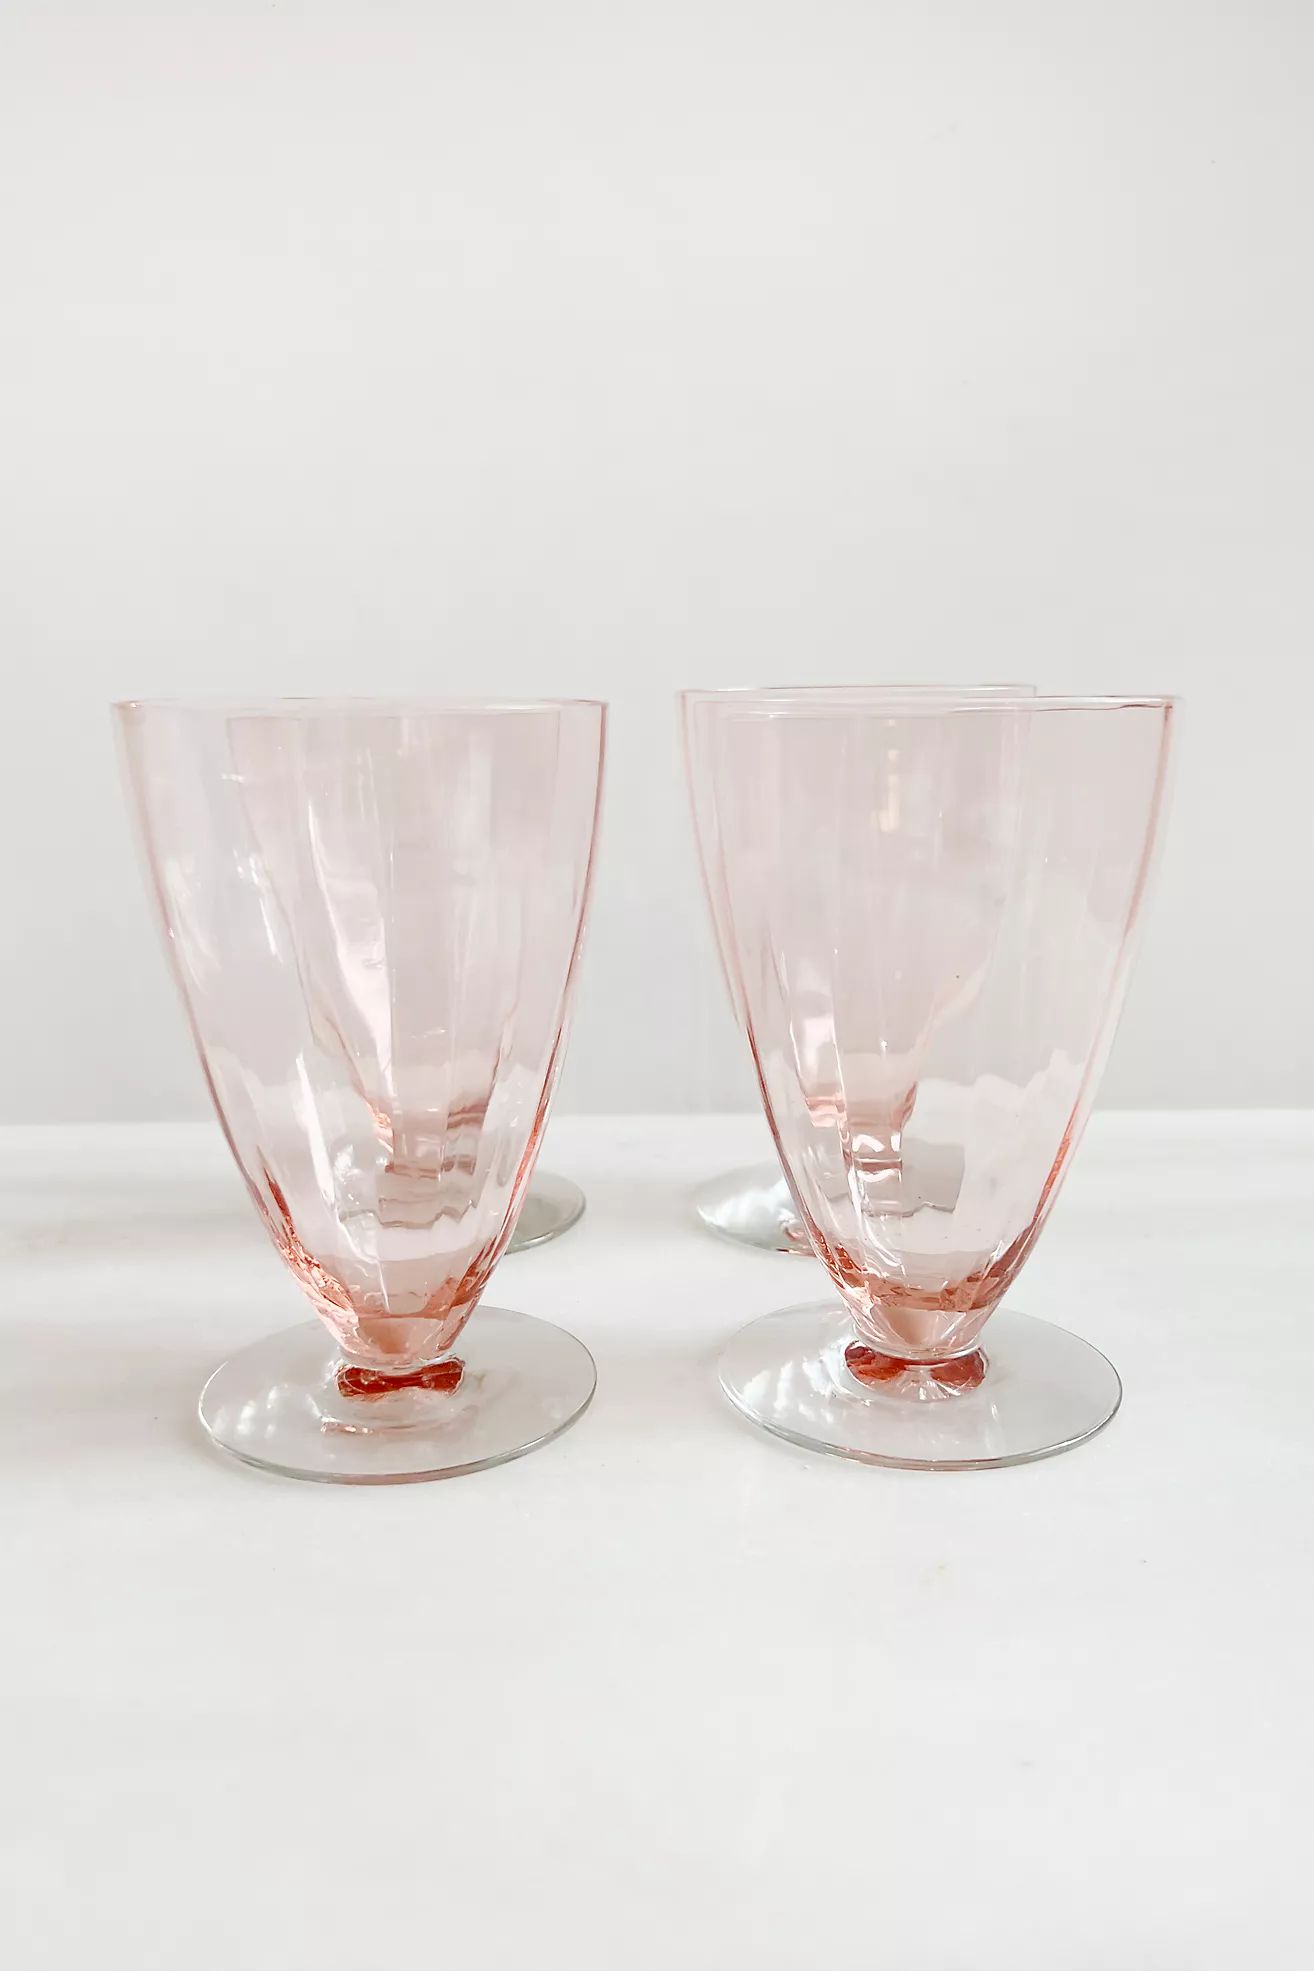 Old Flame Candle Co. Vintage 1950s Footed Pink Depression Glasses, Set of 4 | Anthropologie (US)